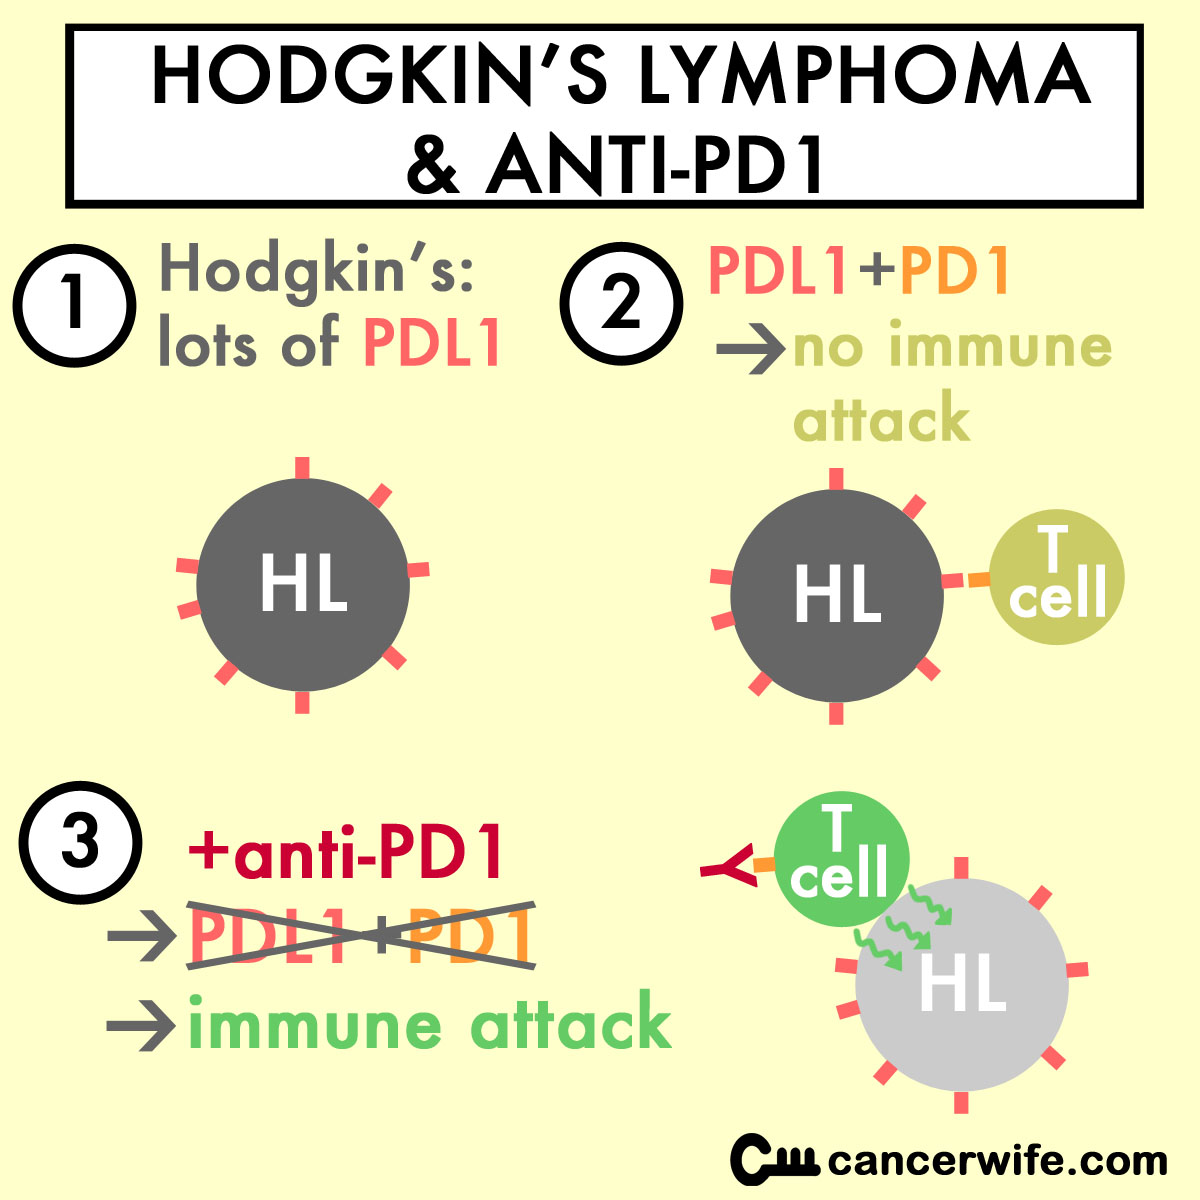 Hodgkin's lymphoma and anti-PD1